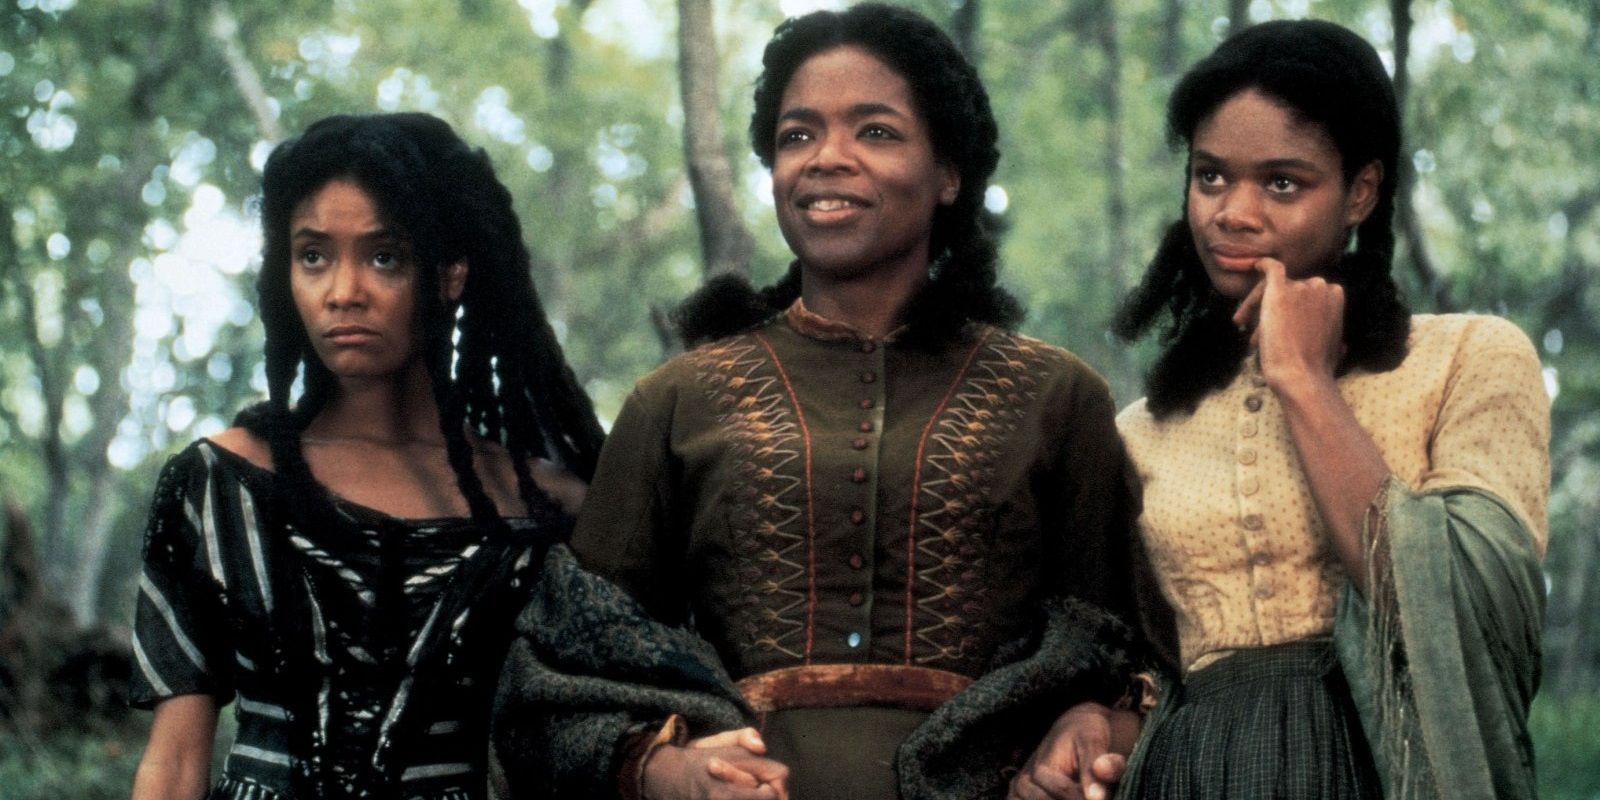 Thandie Newton, Oprah Winfrey and Kimberly Elise look on in Beloved